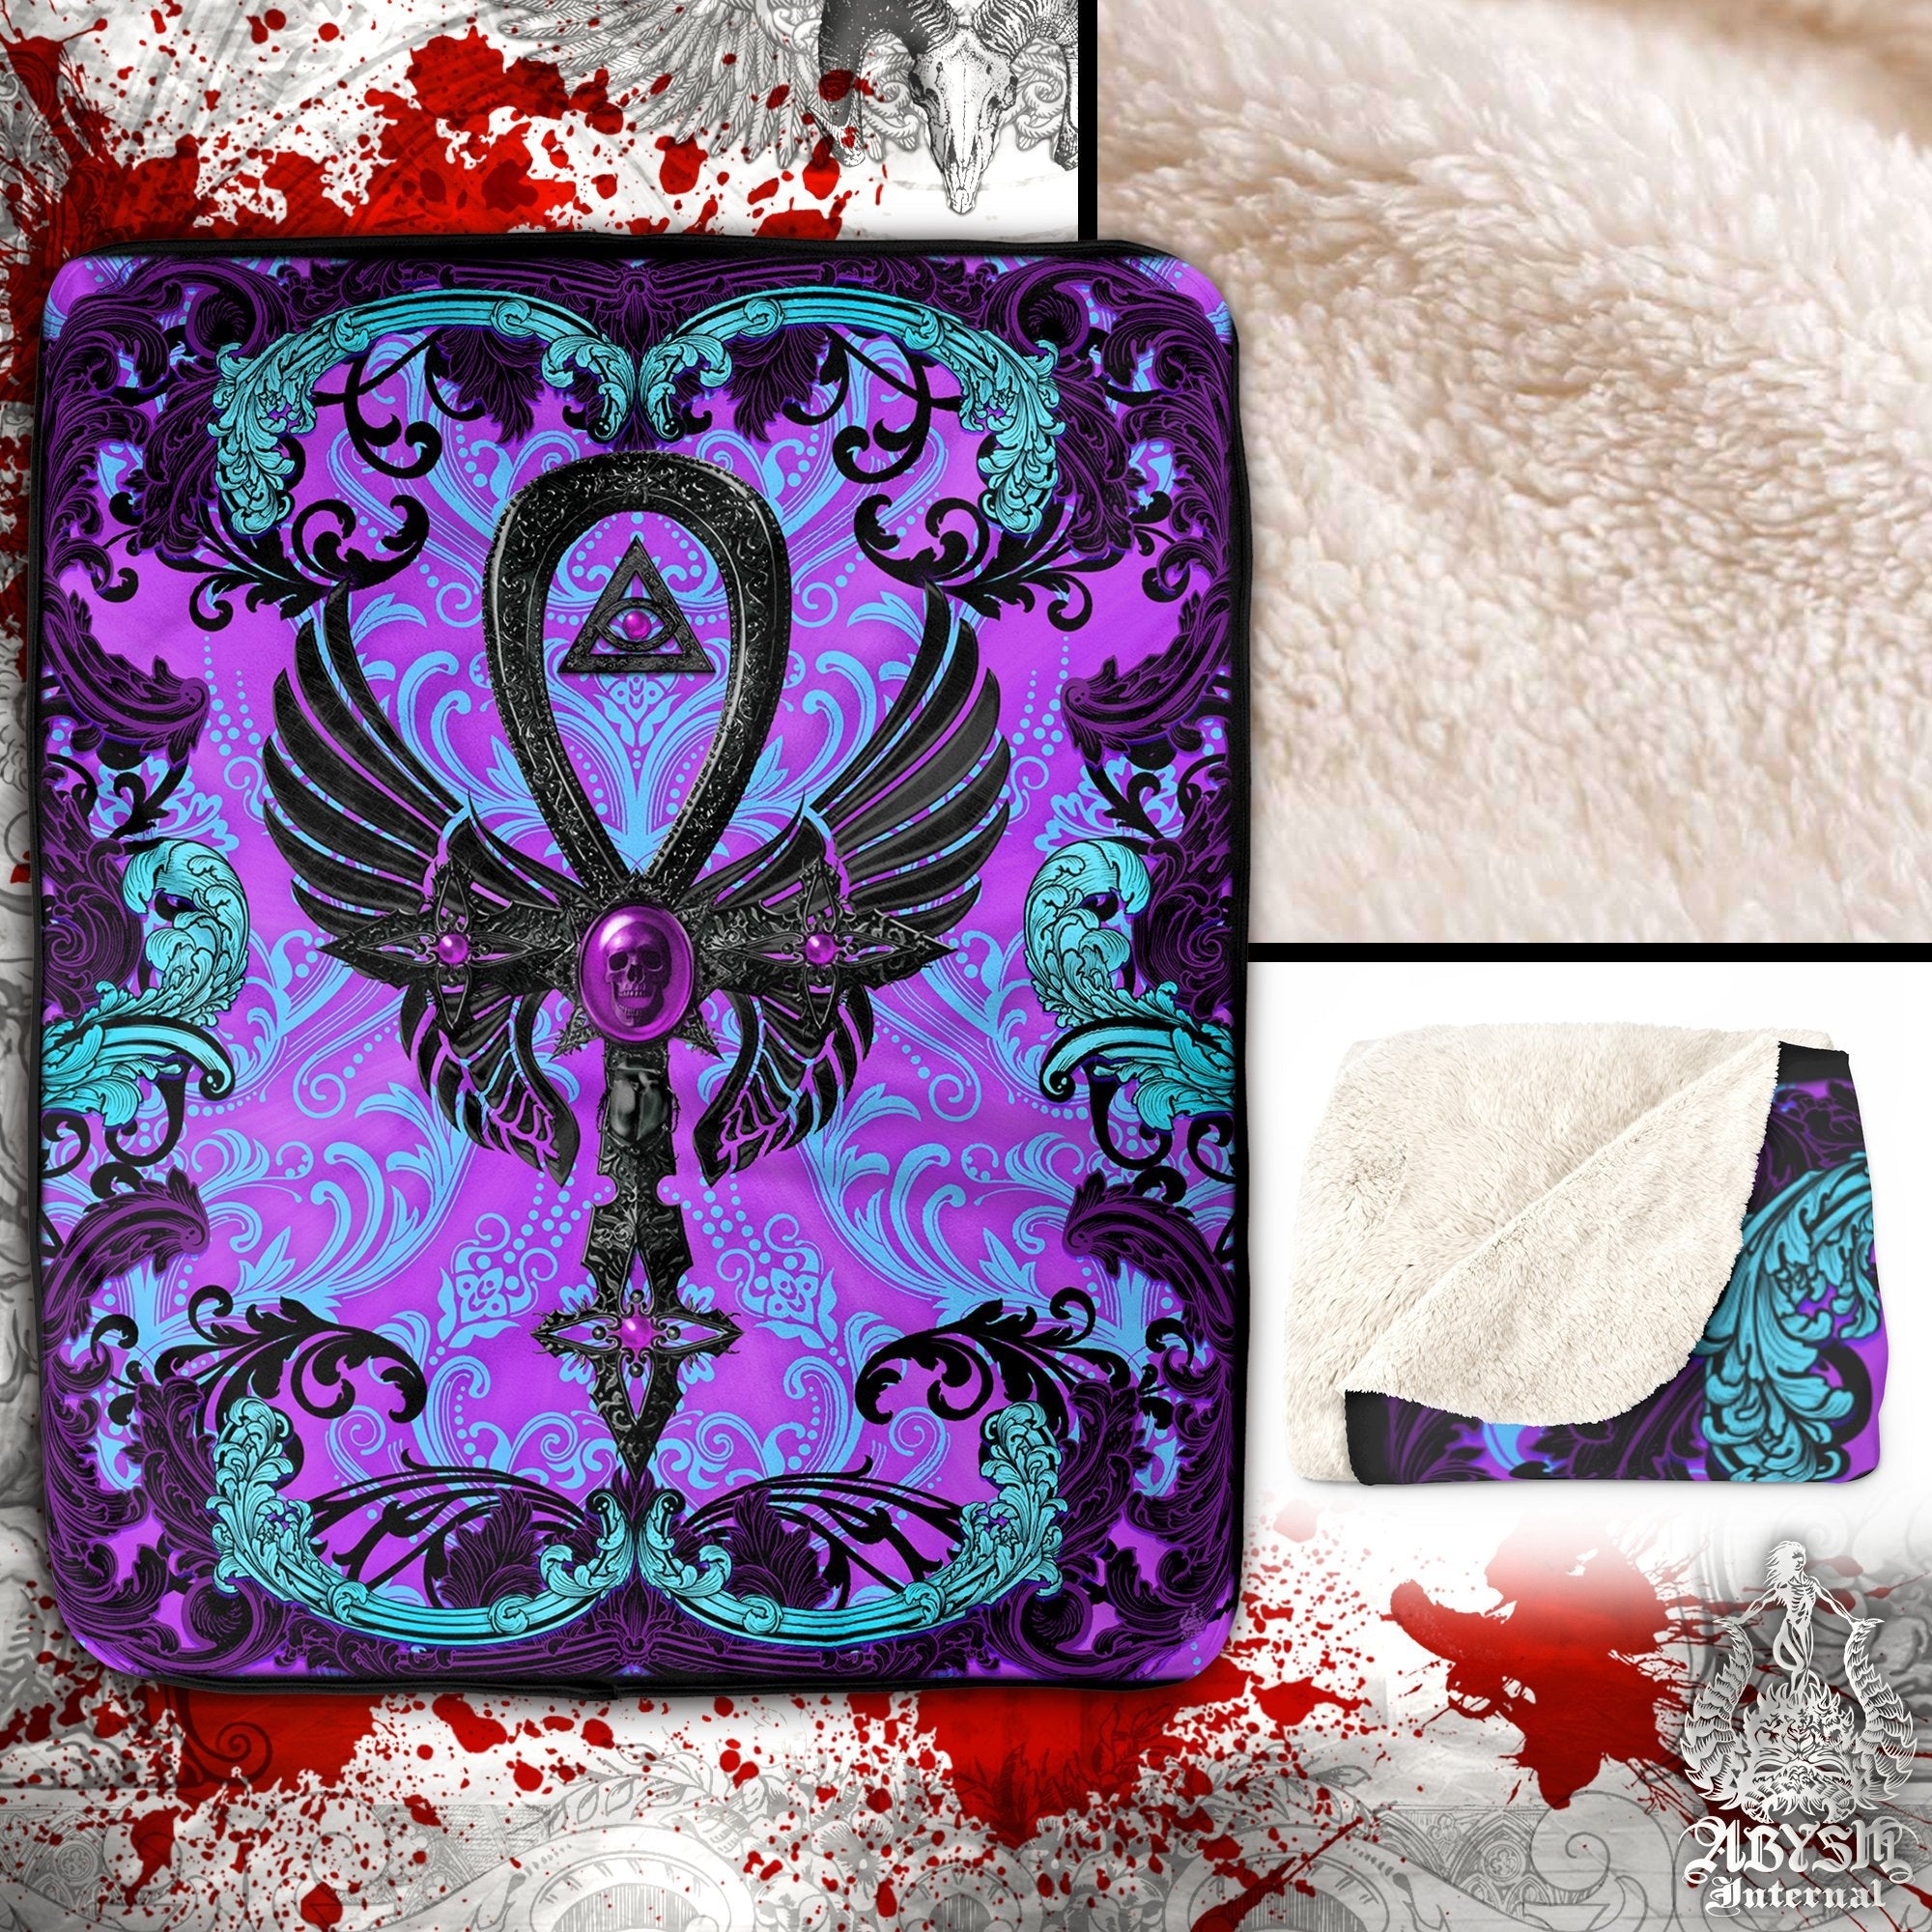 Pastel Goth Throw Fleece Blanket, Gothic Home Decor, Alternative Art Gift - Ankh Cross, Black - Abysm Internal